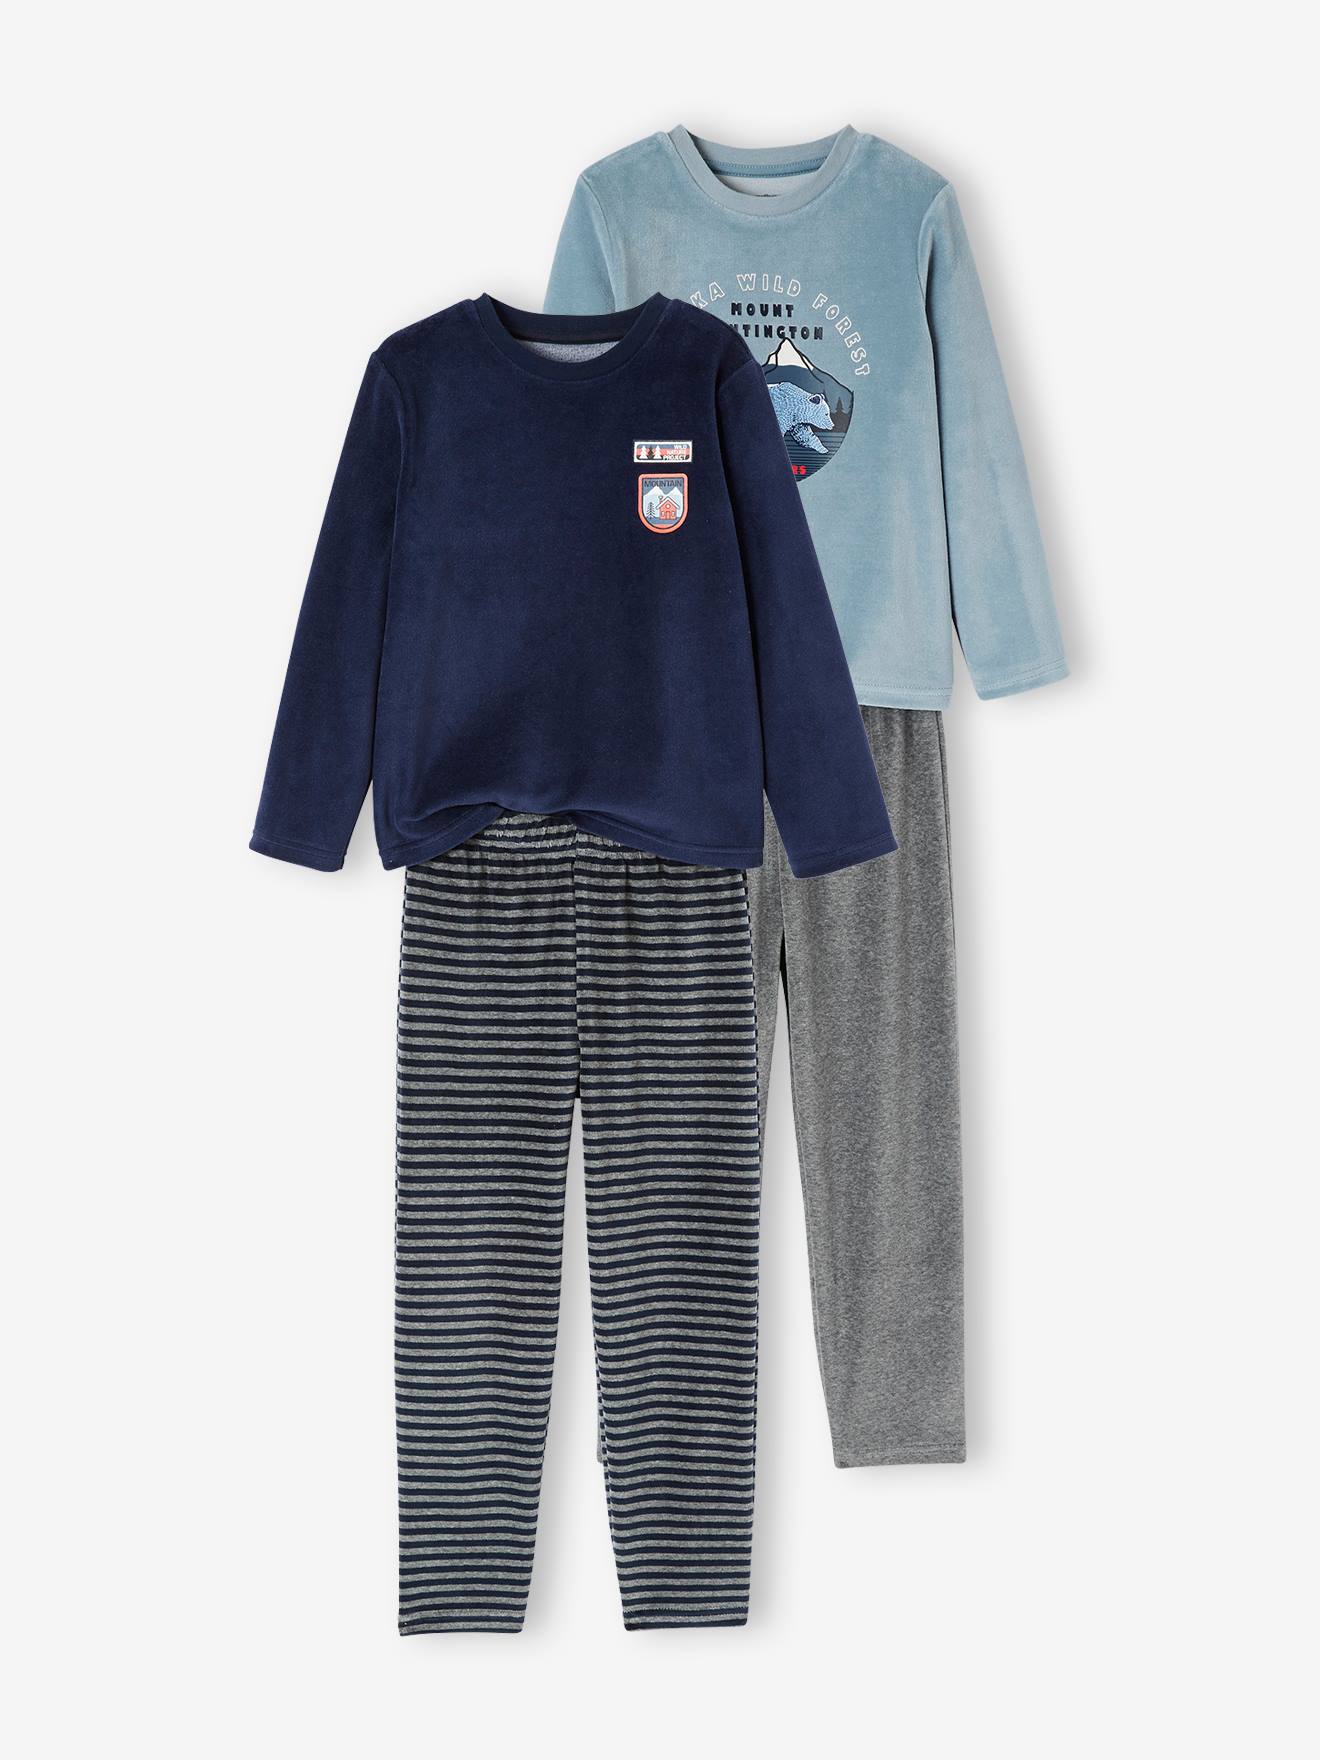 New M&S Kids PyjamaFancy Dress Sleepwear jumpsuit bodysuit onesiee Star Wars 